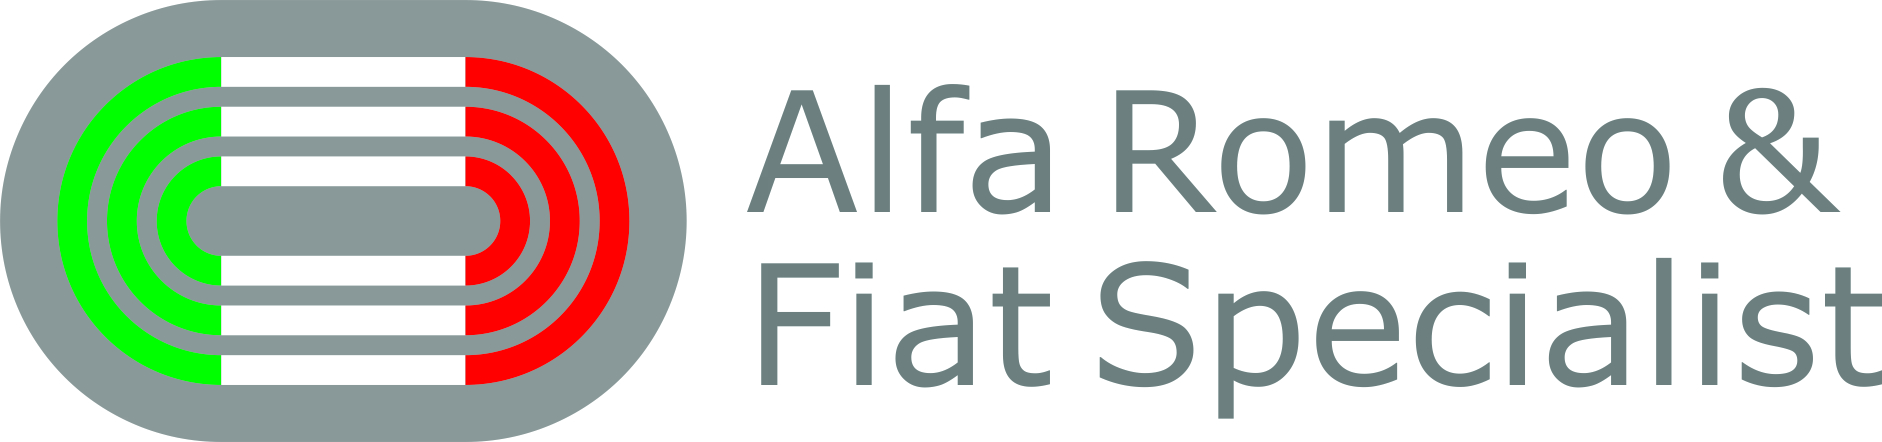 logo Alfa Romeo & Fiat Specialist jpg CMYK.jpg